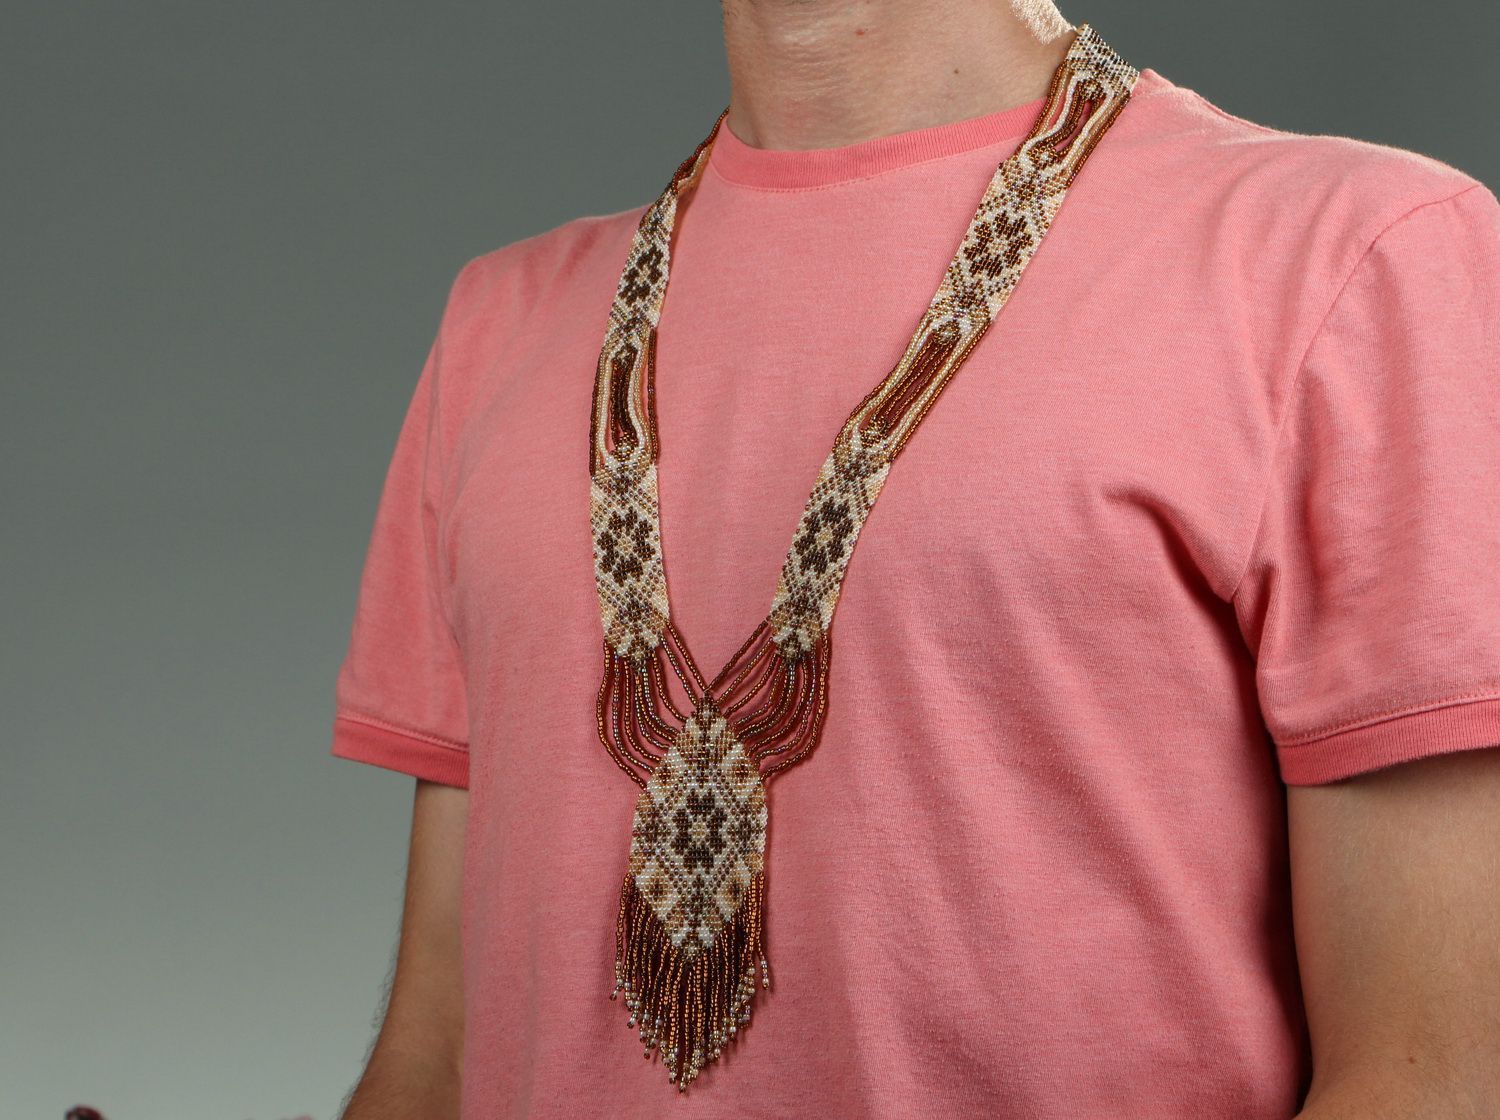 Neck jewelry made of beads, gerdan photo 4